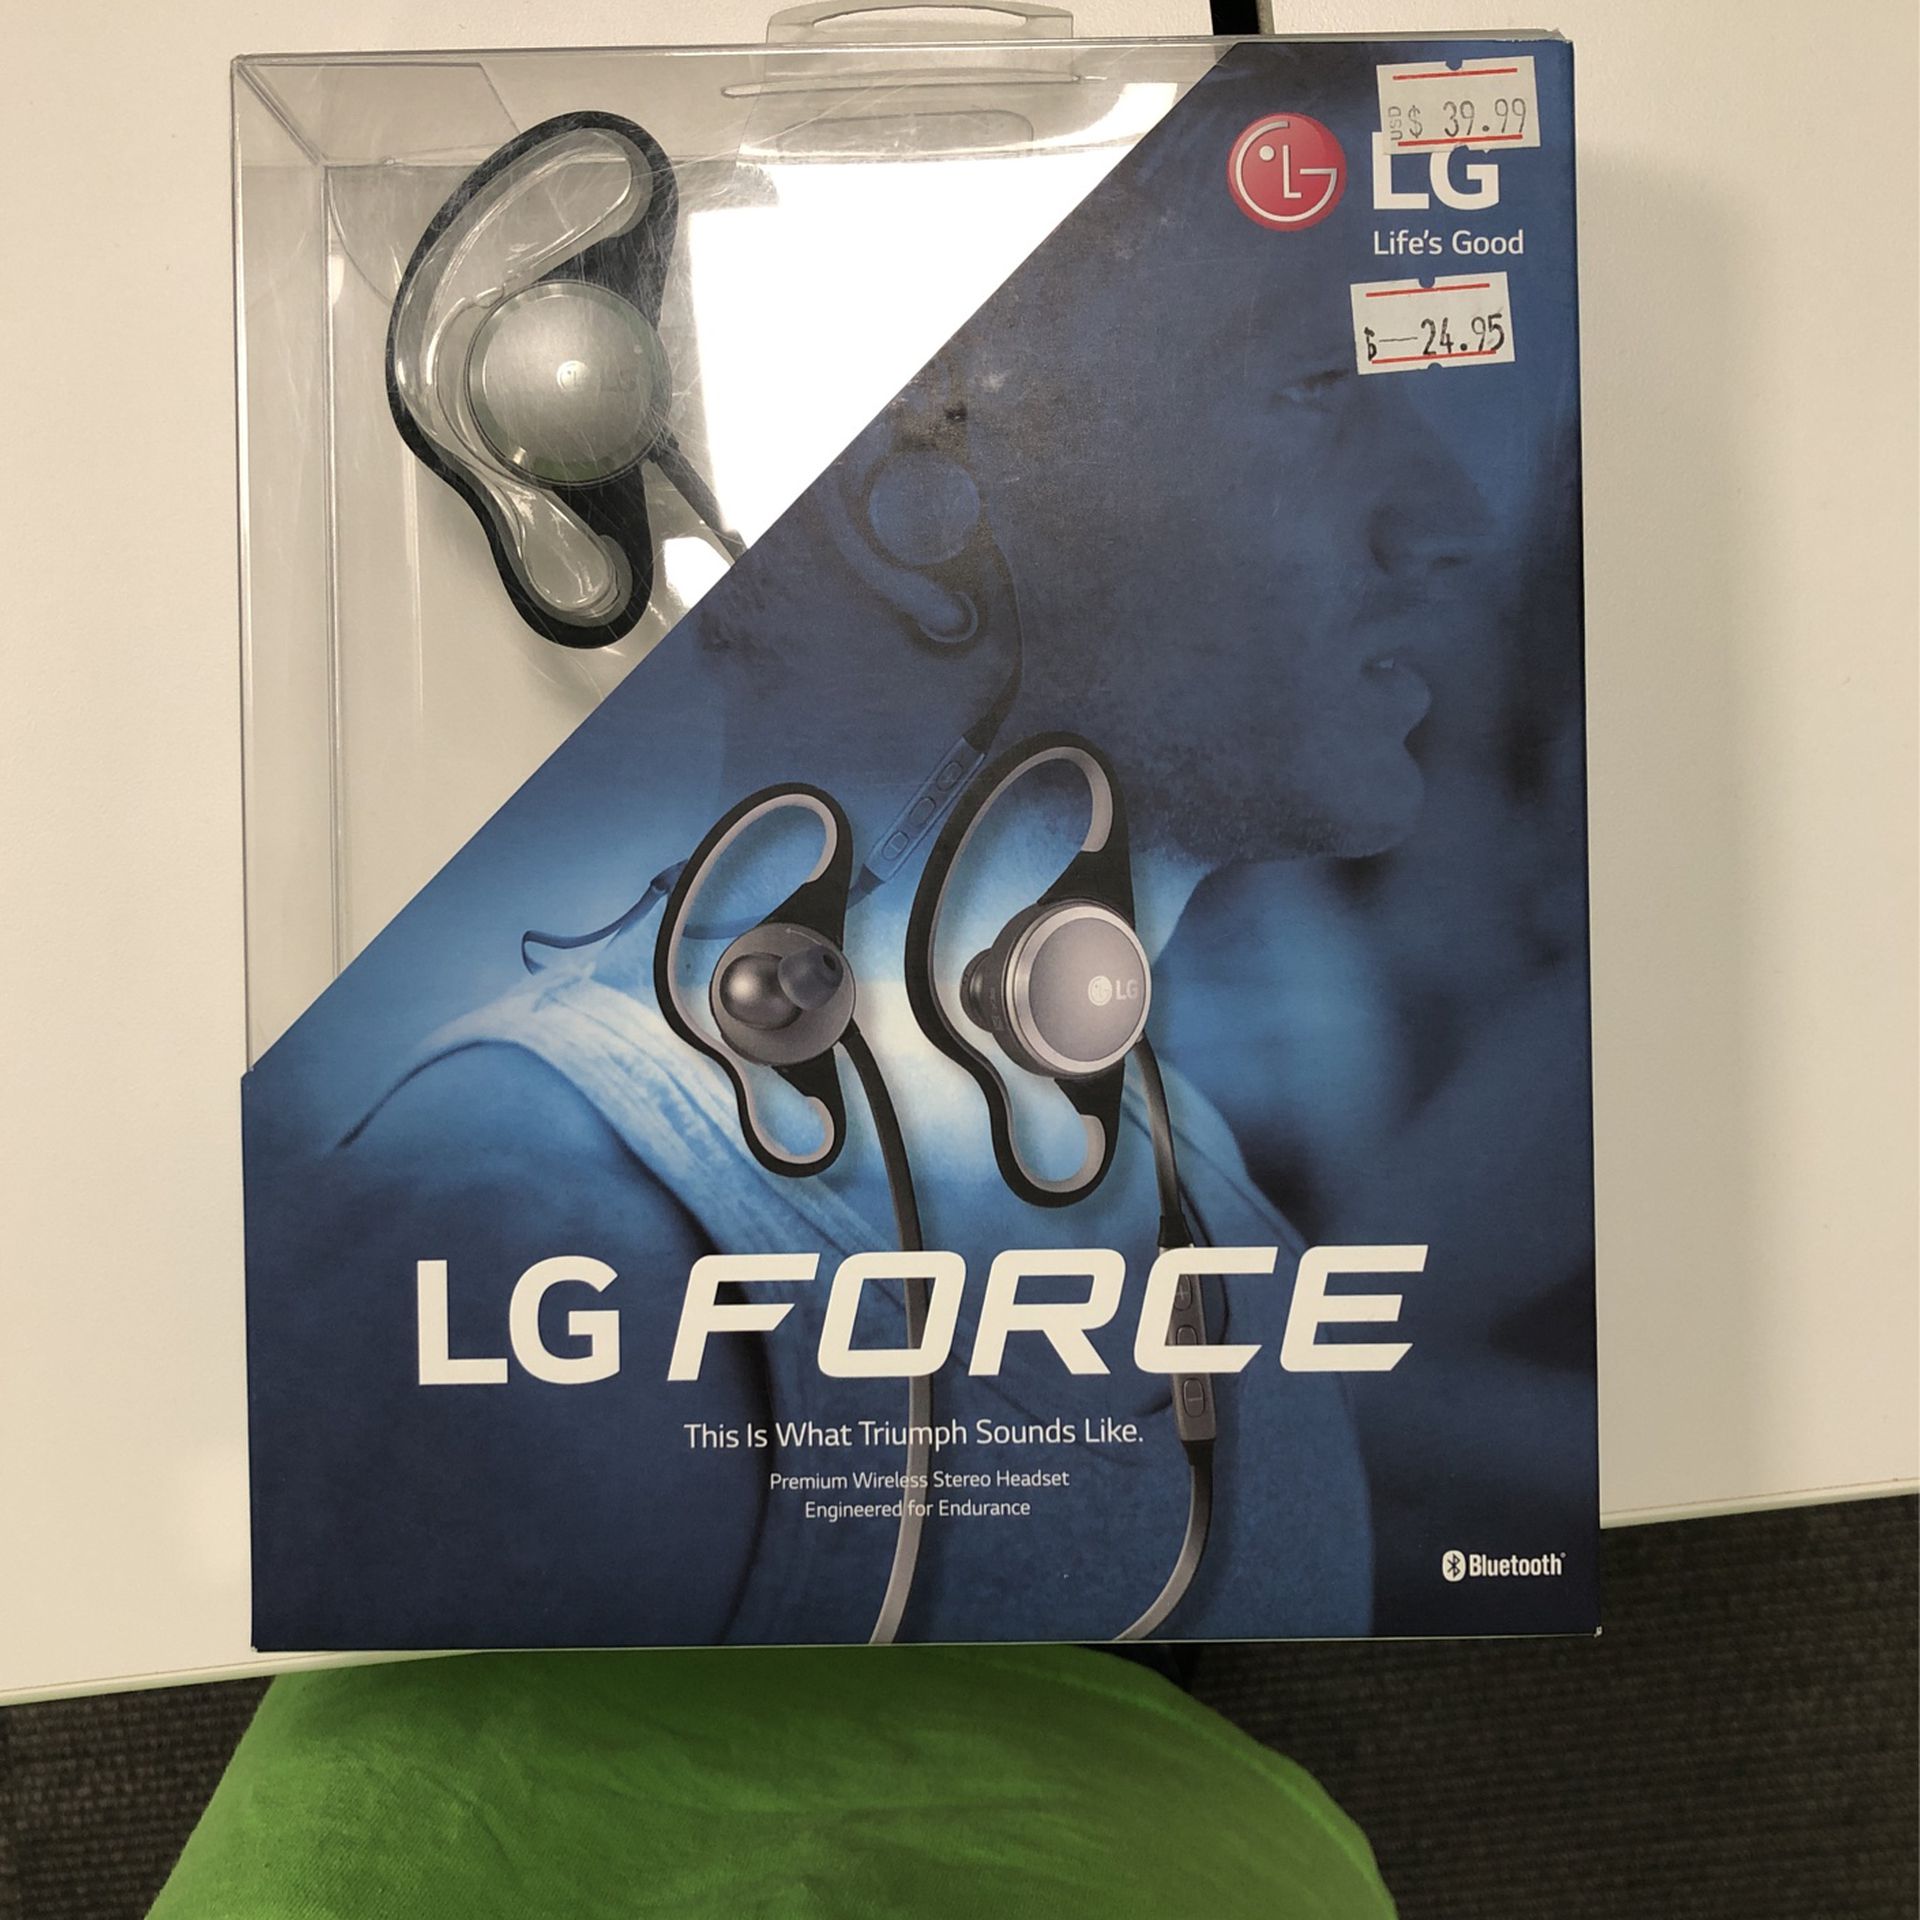 Sale LG Force Wireless Stereo Headset